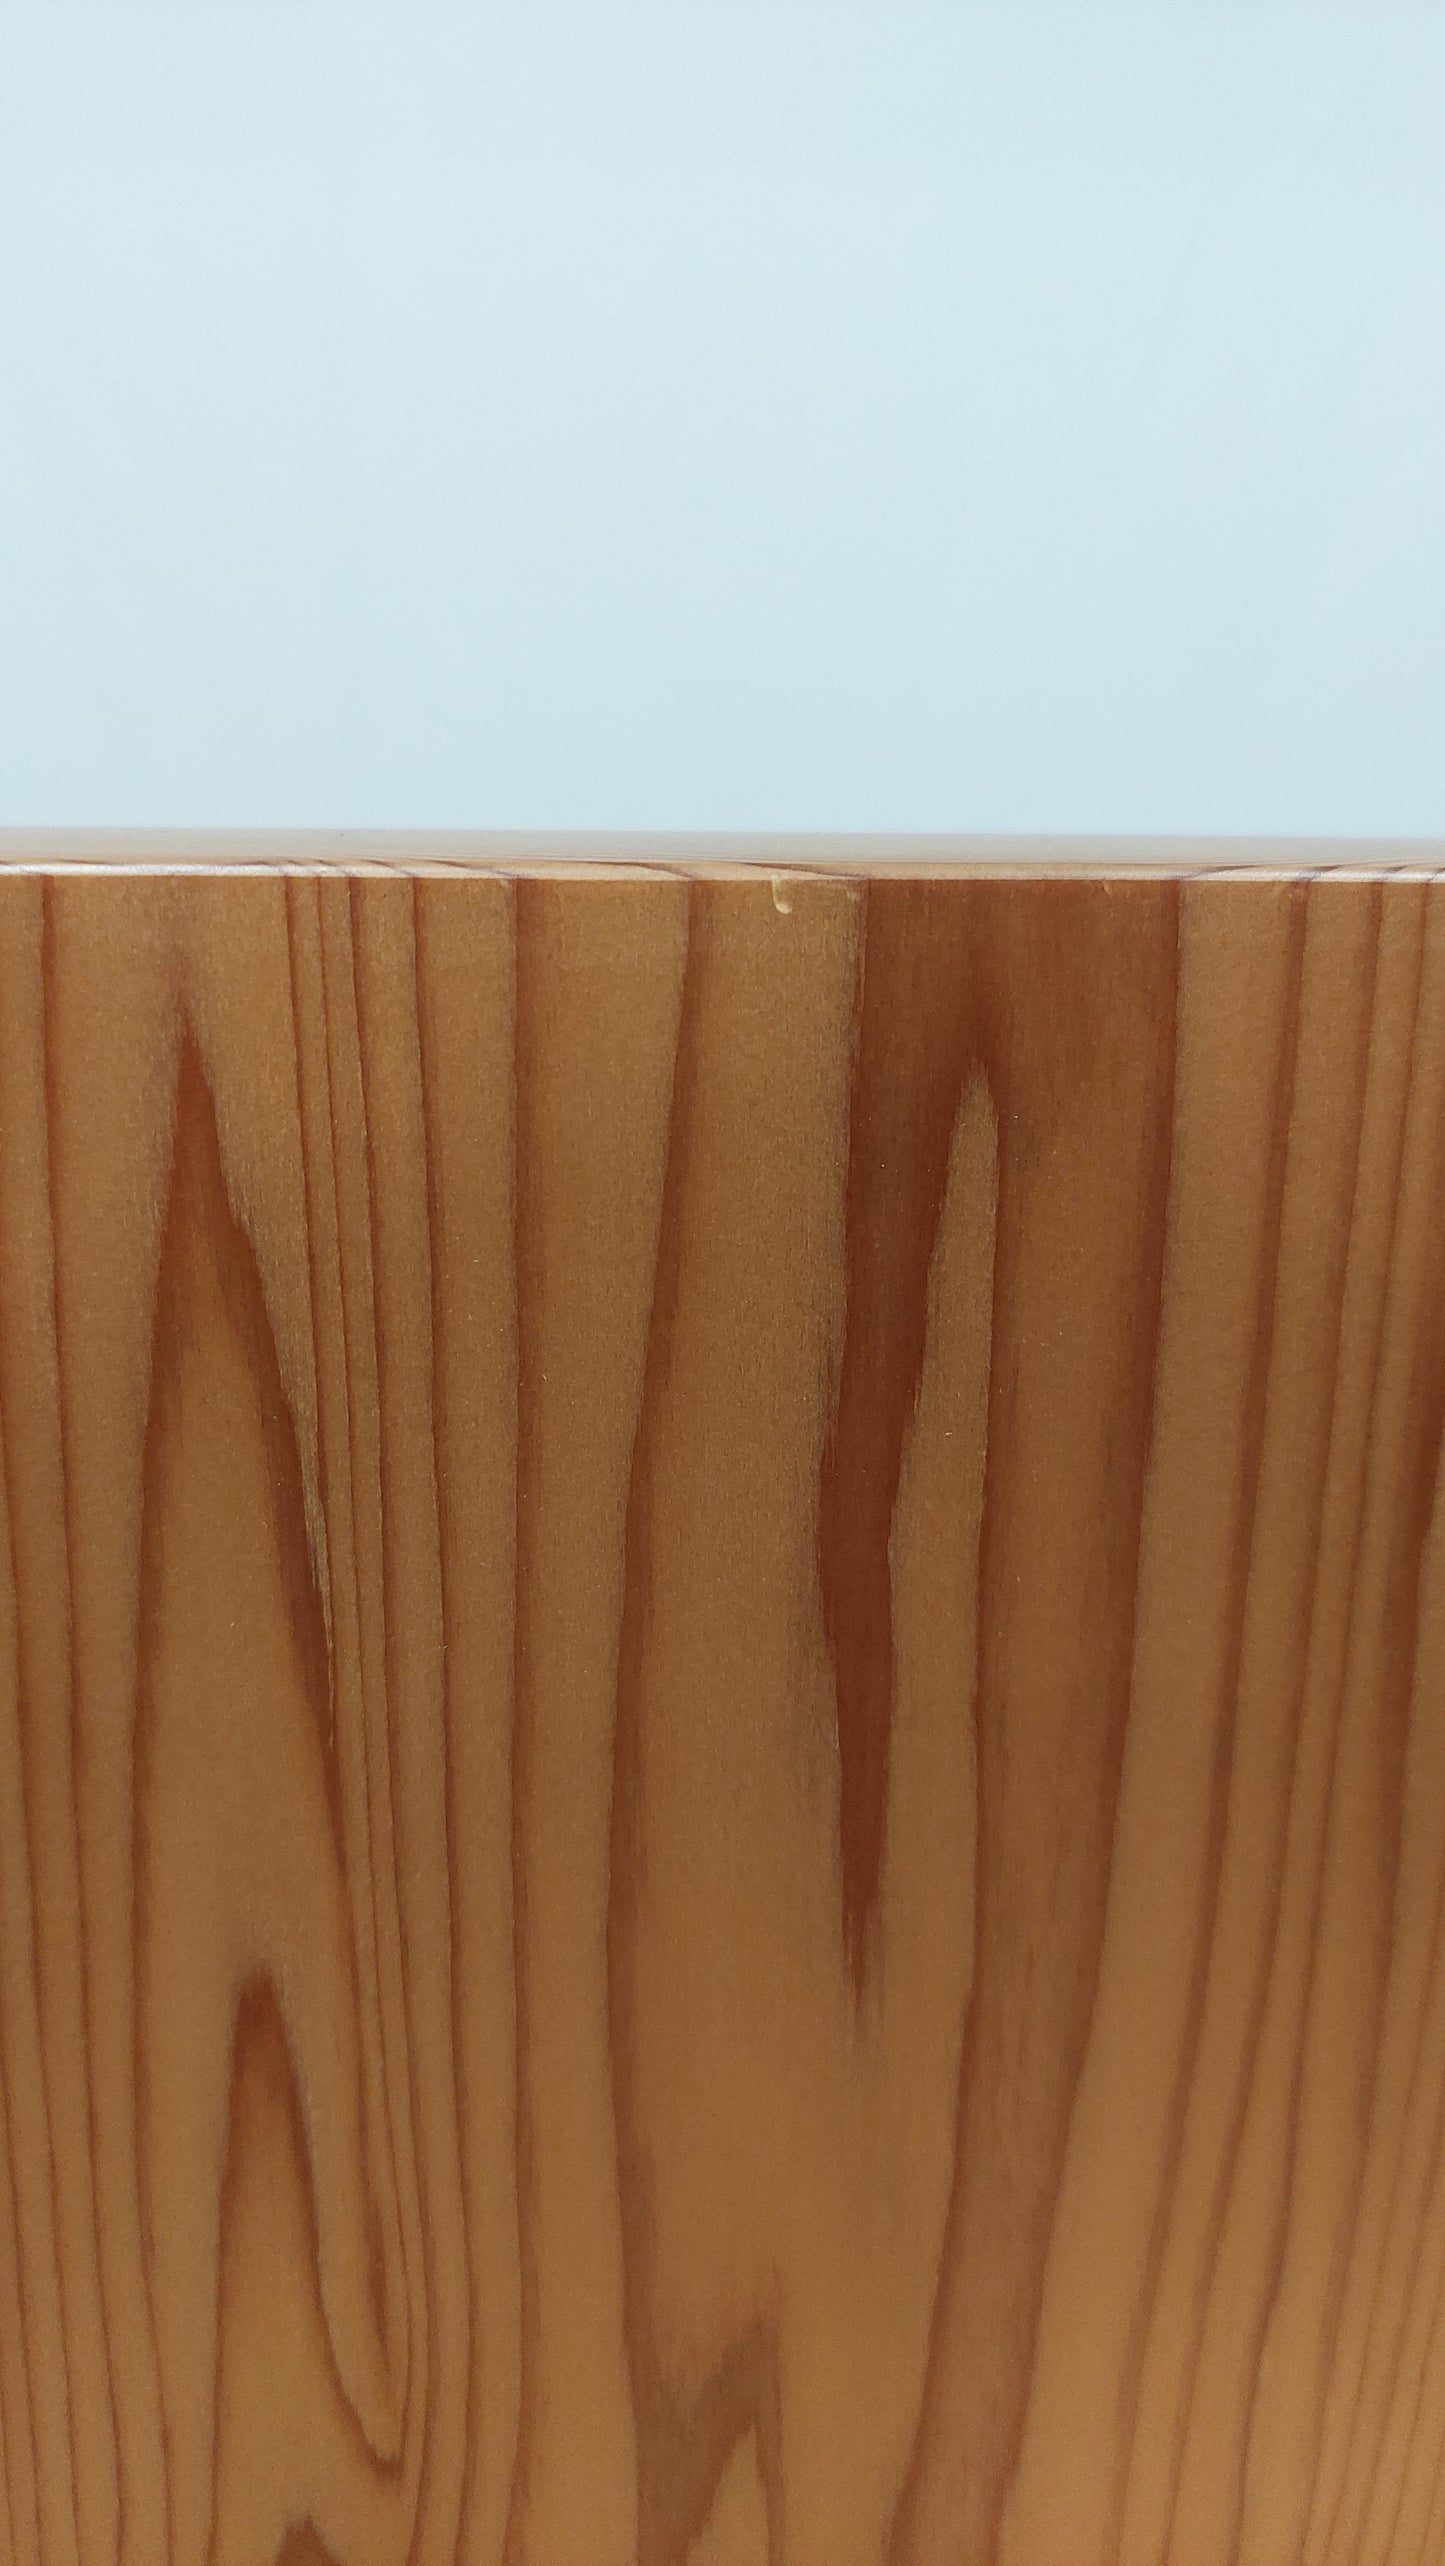 A0021 杉 無垢一枚板 テーブル天板 1,320mm × 400mm × 25mm